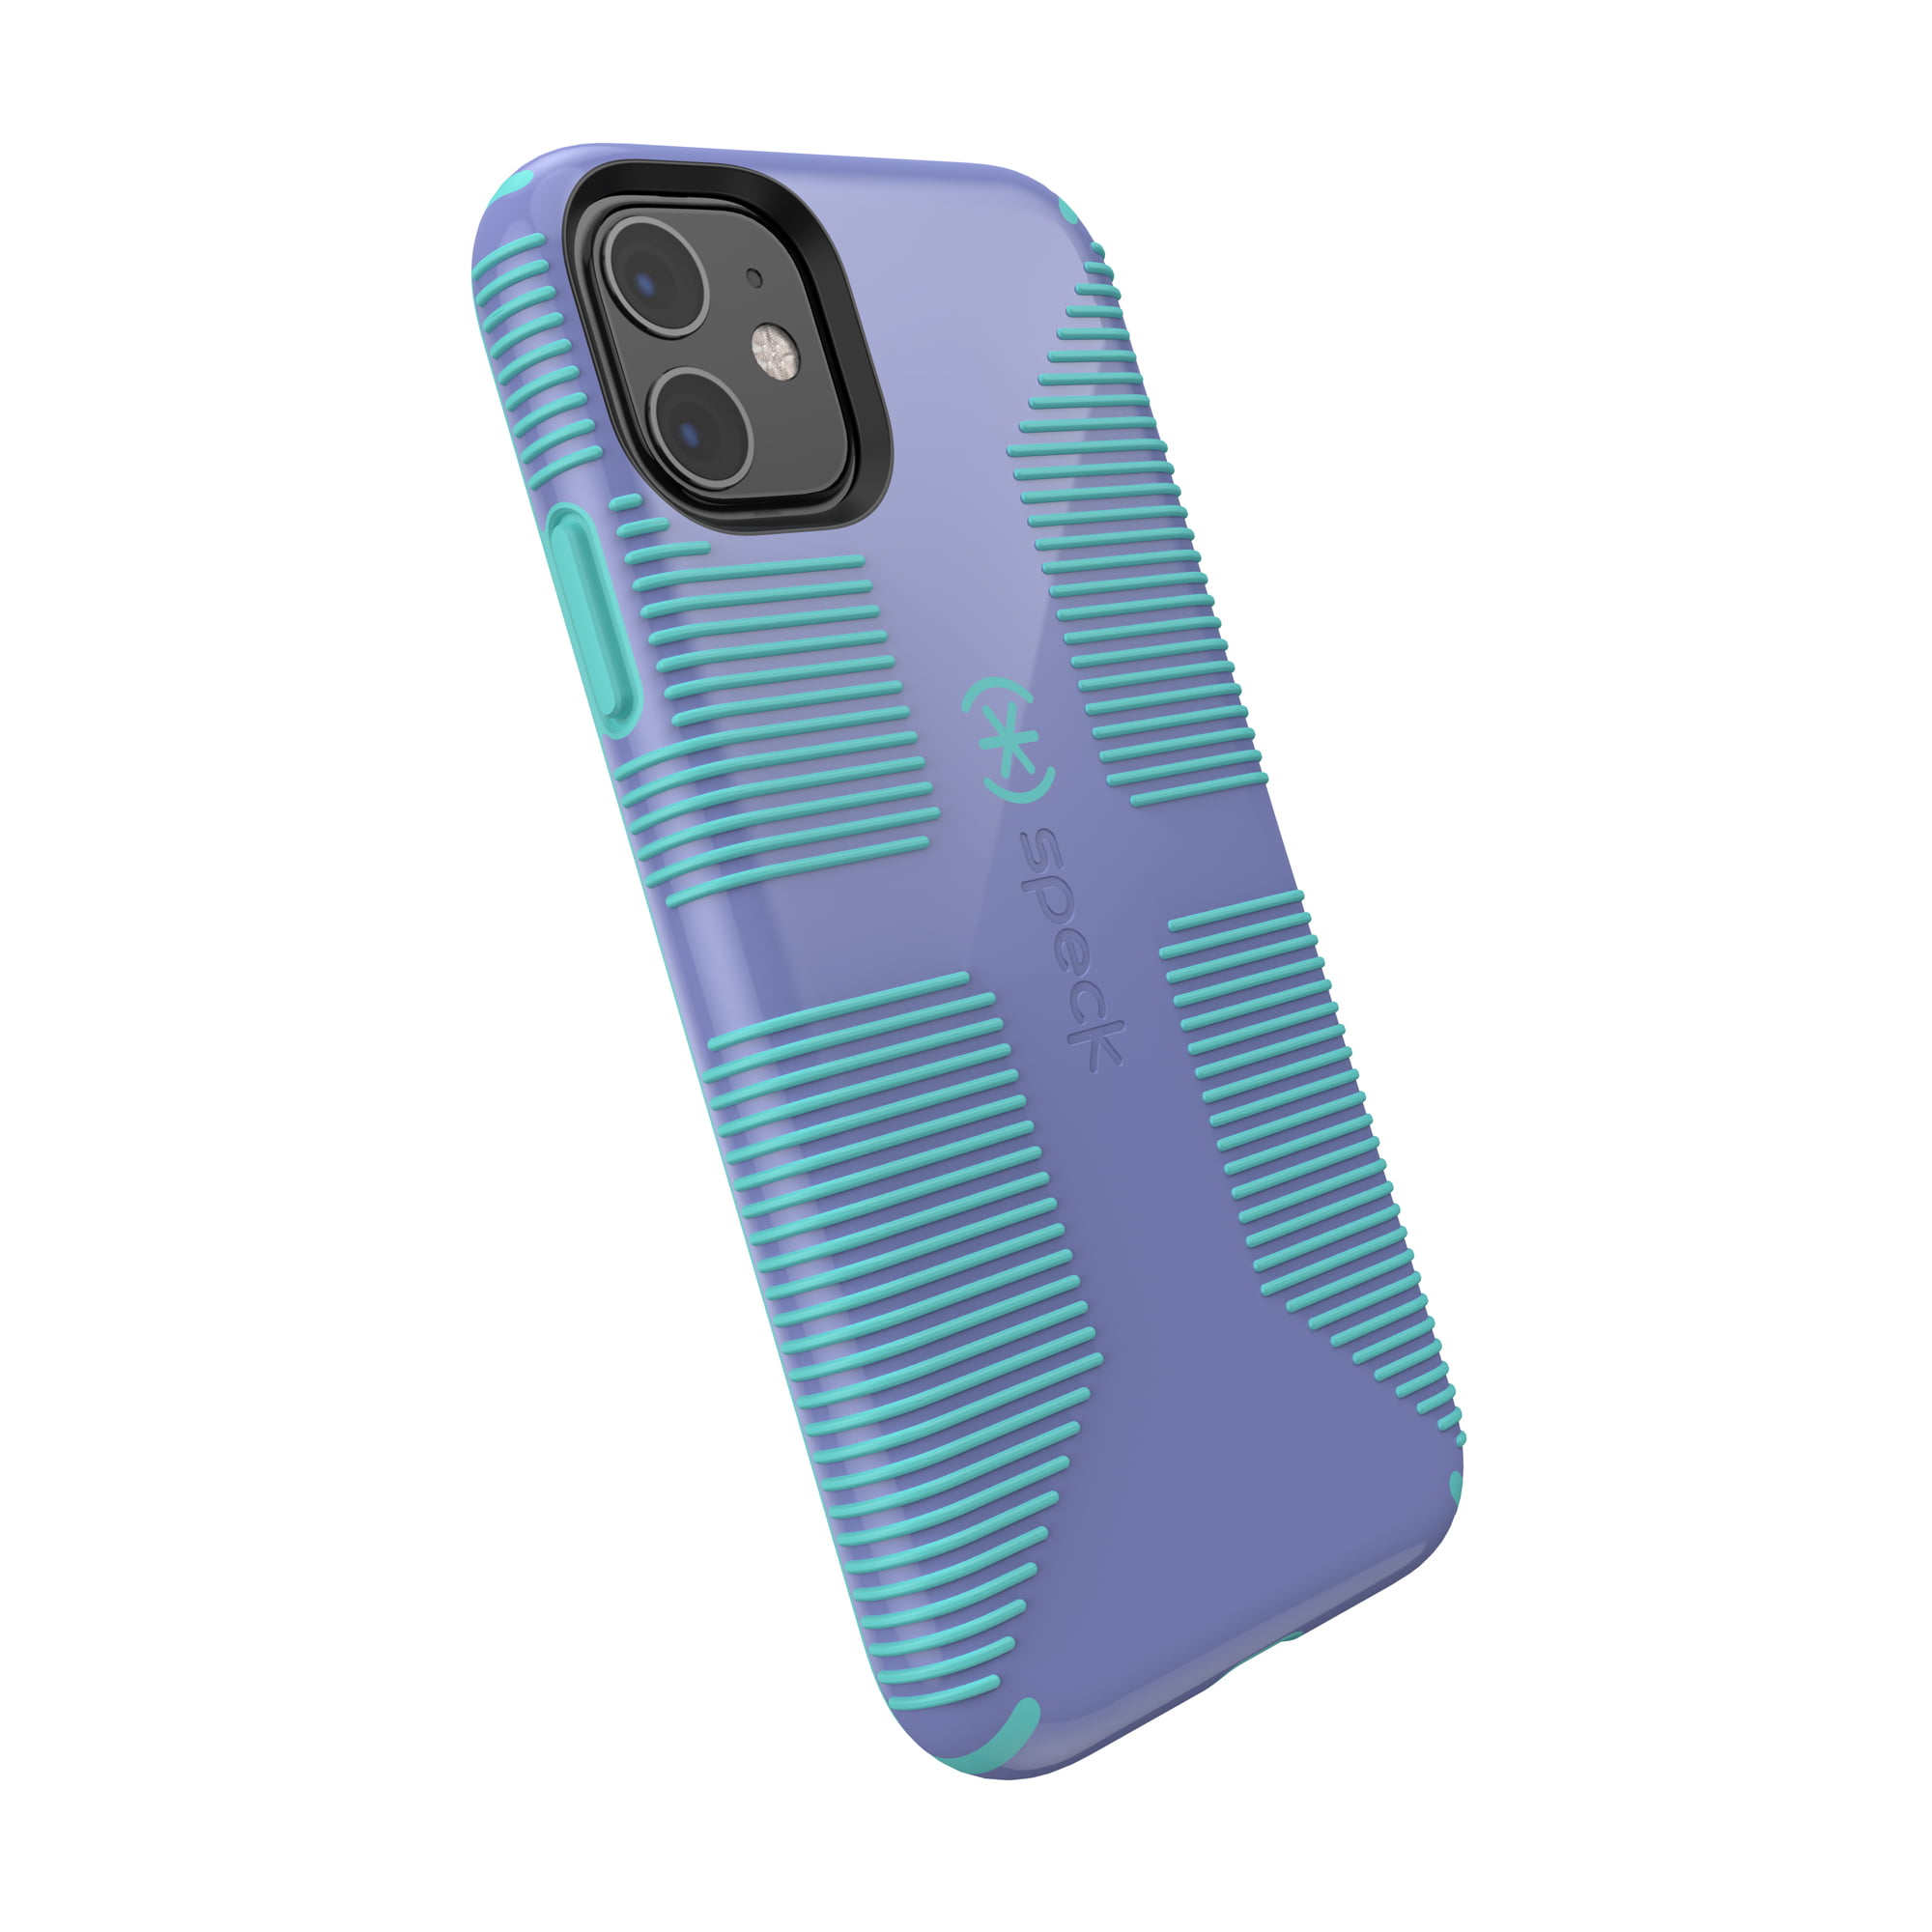 Speck Candyshell Grip For Iphone 11 Case Purple Blue Walmart Com Walmart Com